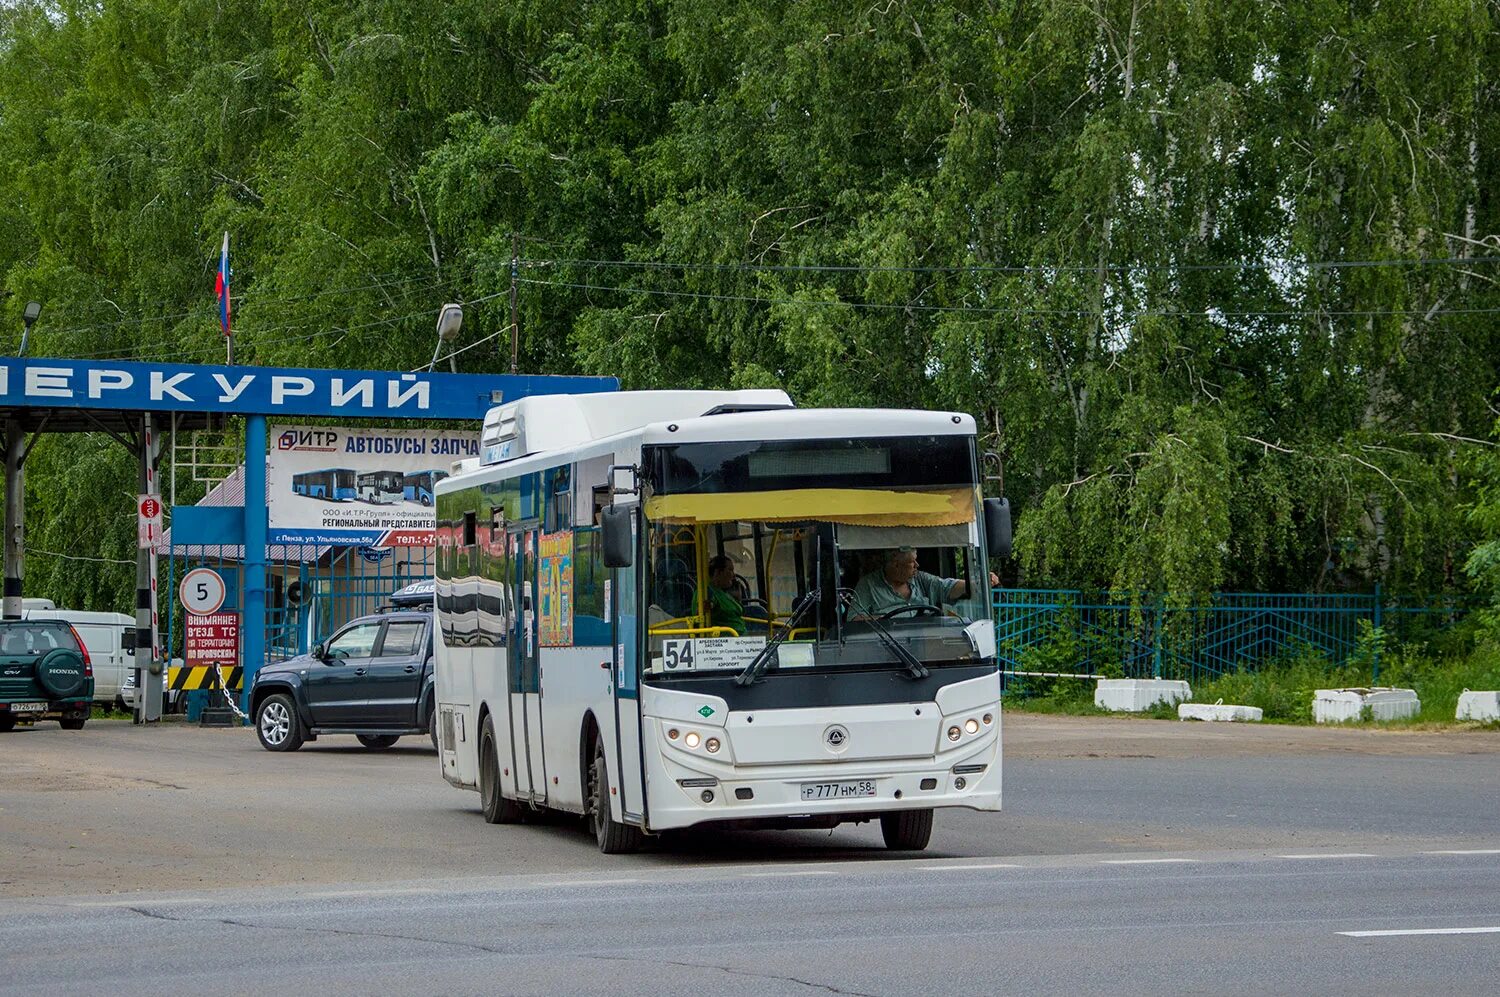 АТП Меркурий Пенза. КАВЗ 4270-70 ЯРКАМП. Автобусы России. Меркурий Пенза автобусы.